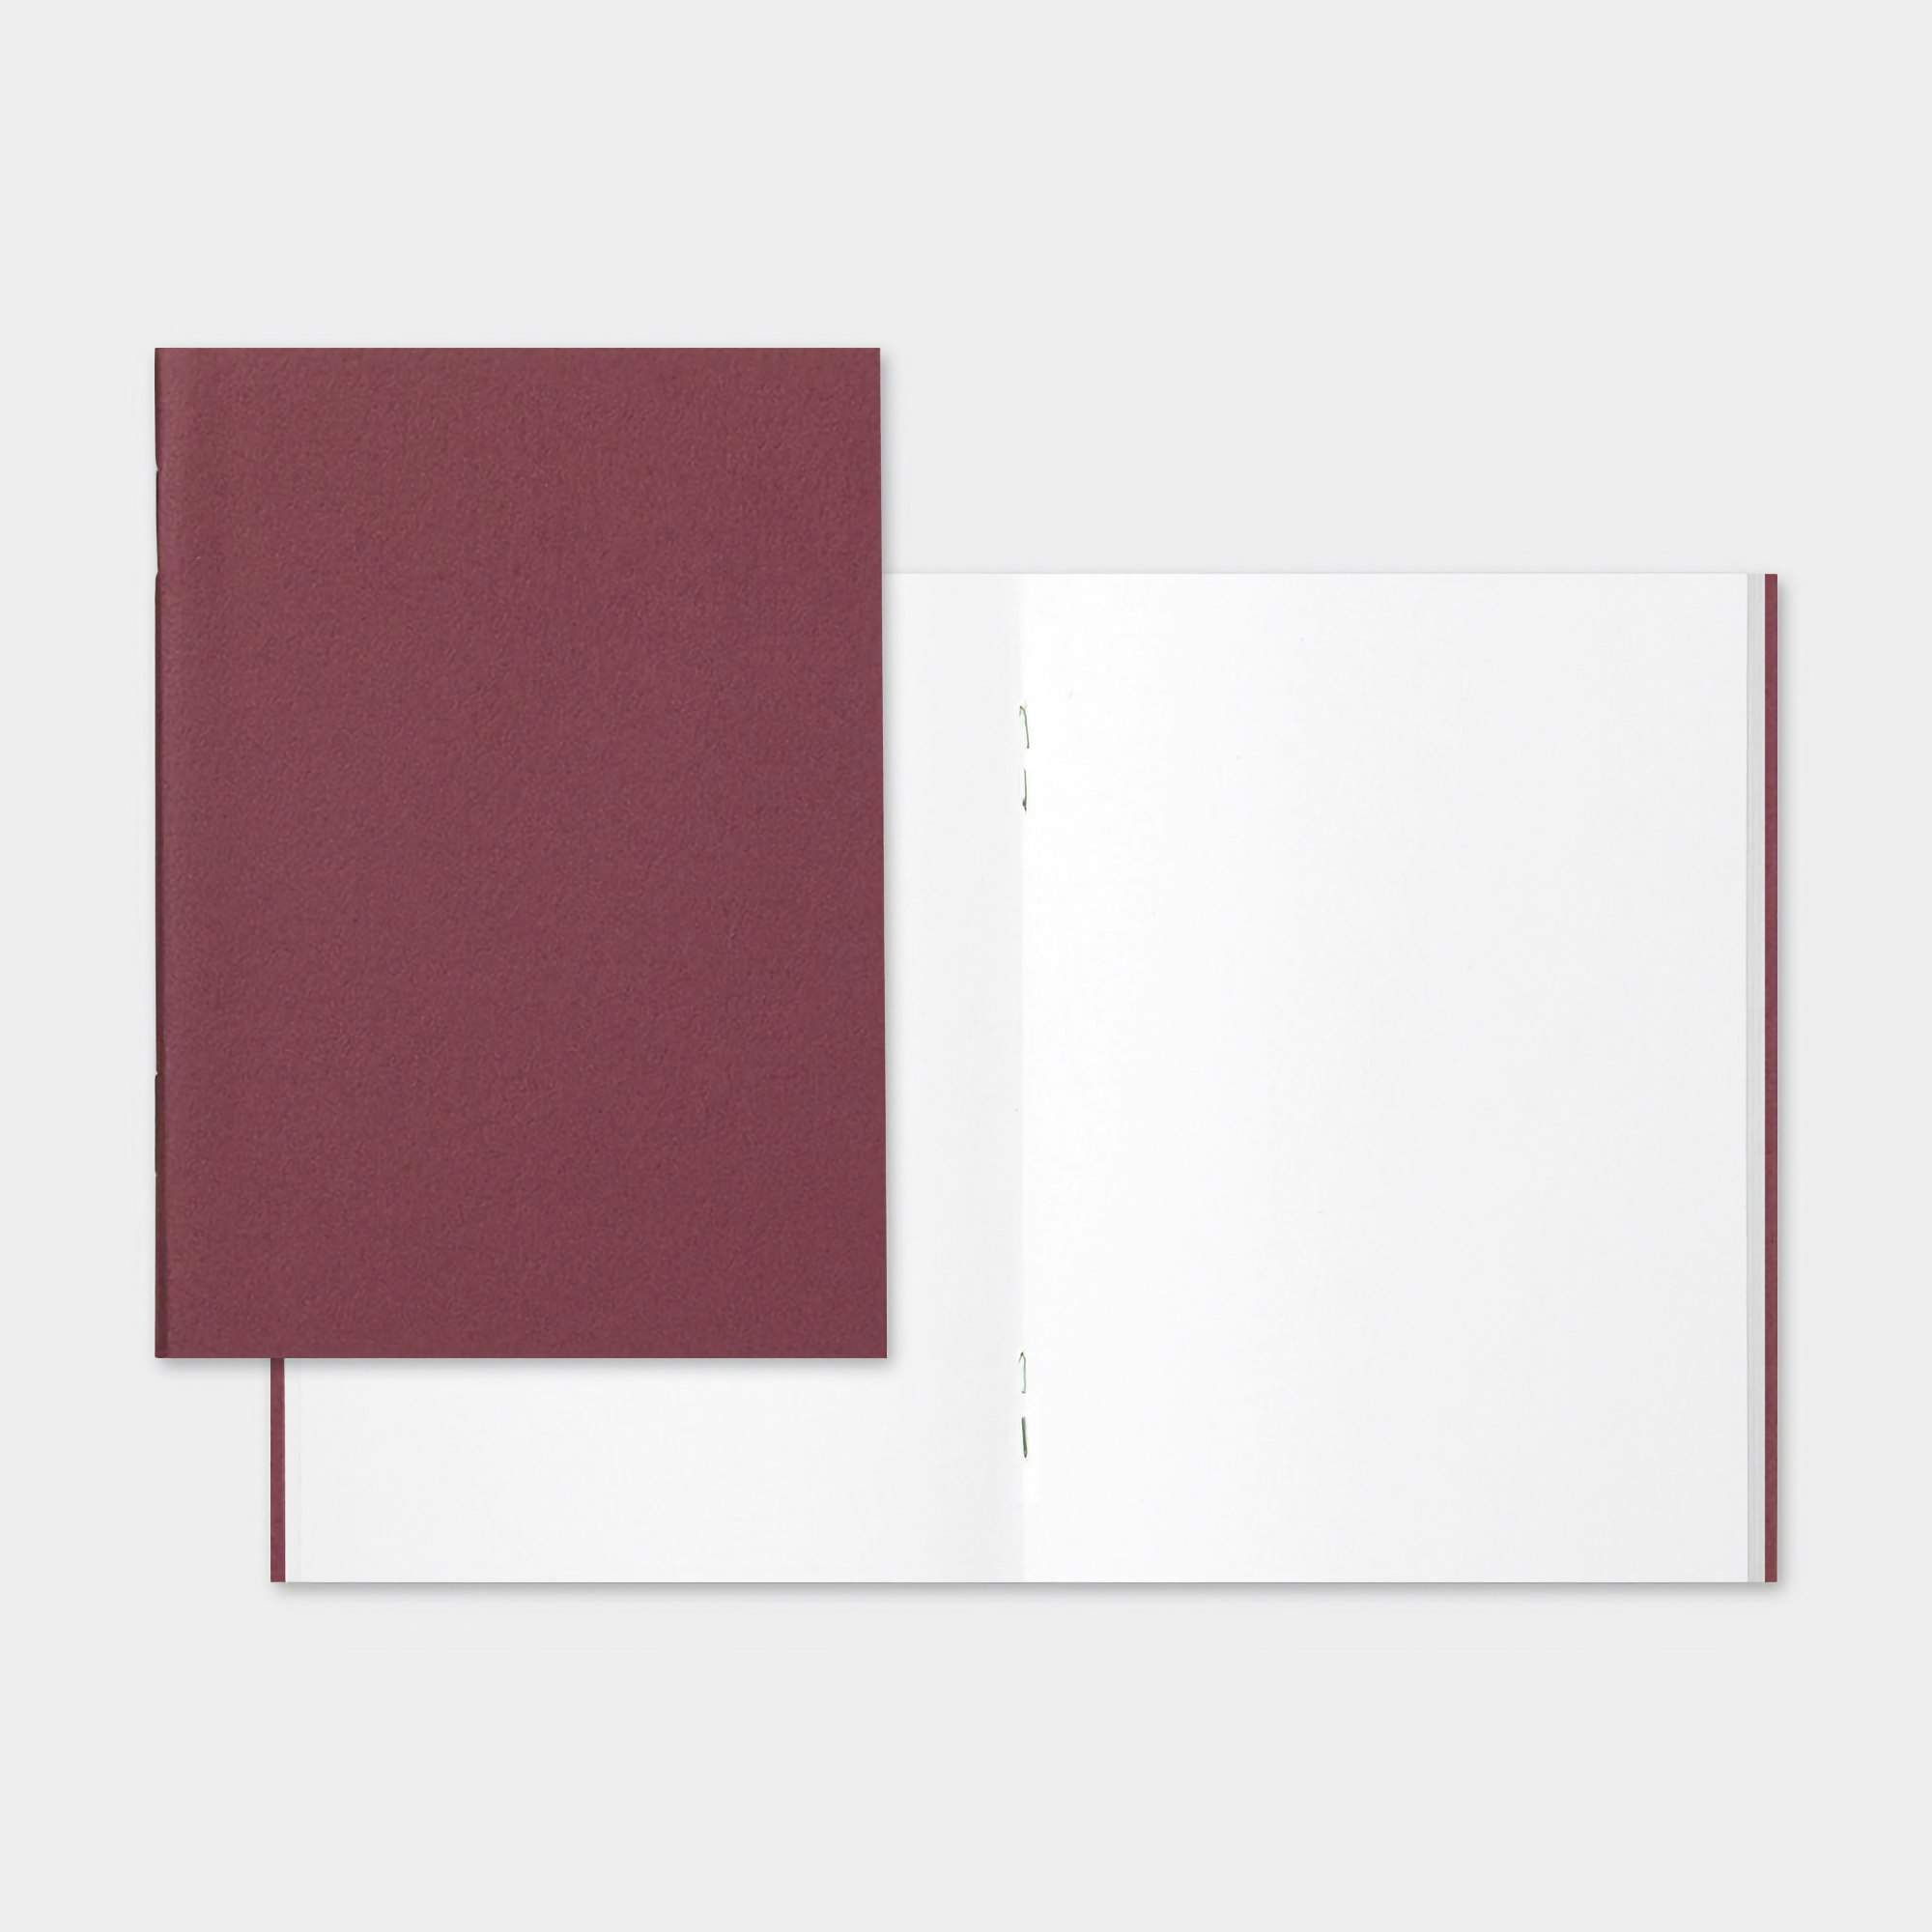 Traveler’s Company Traveler's notebook – Olive, Passport size (Starter Kit)